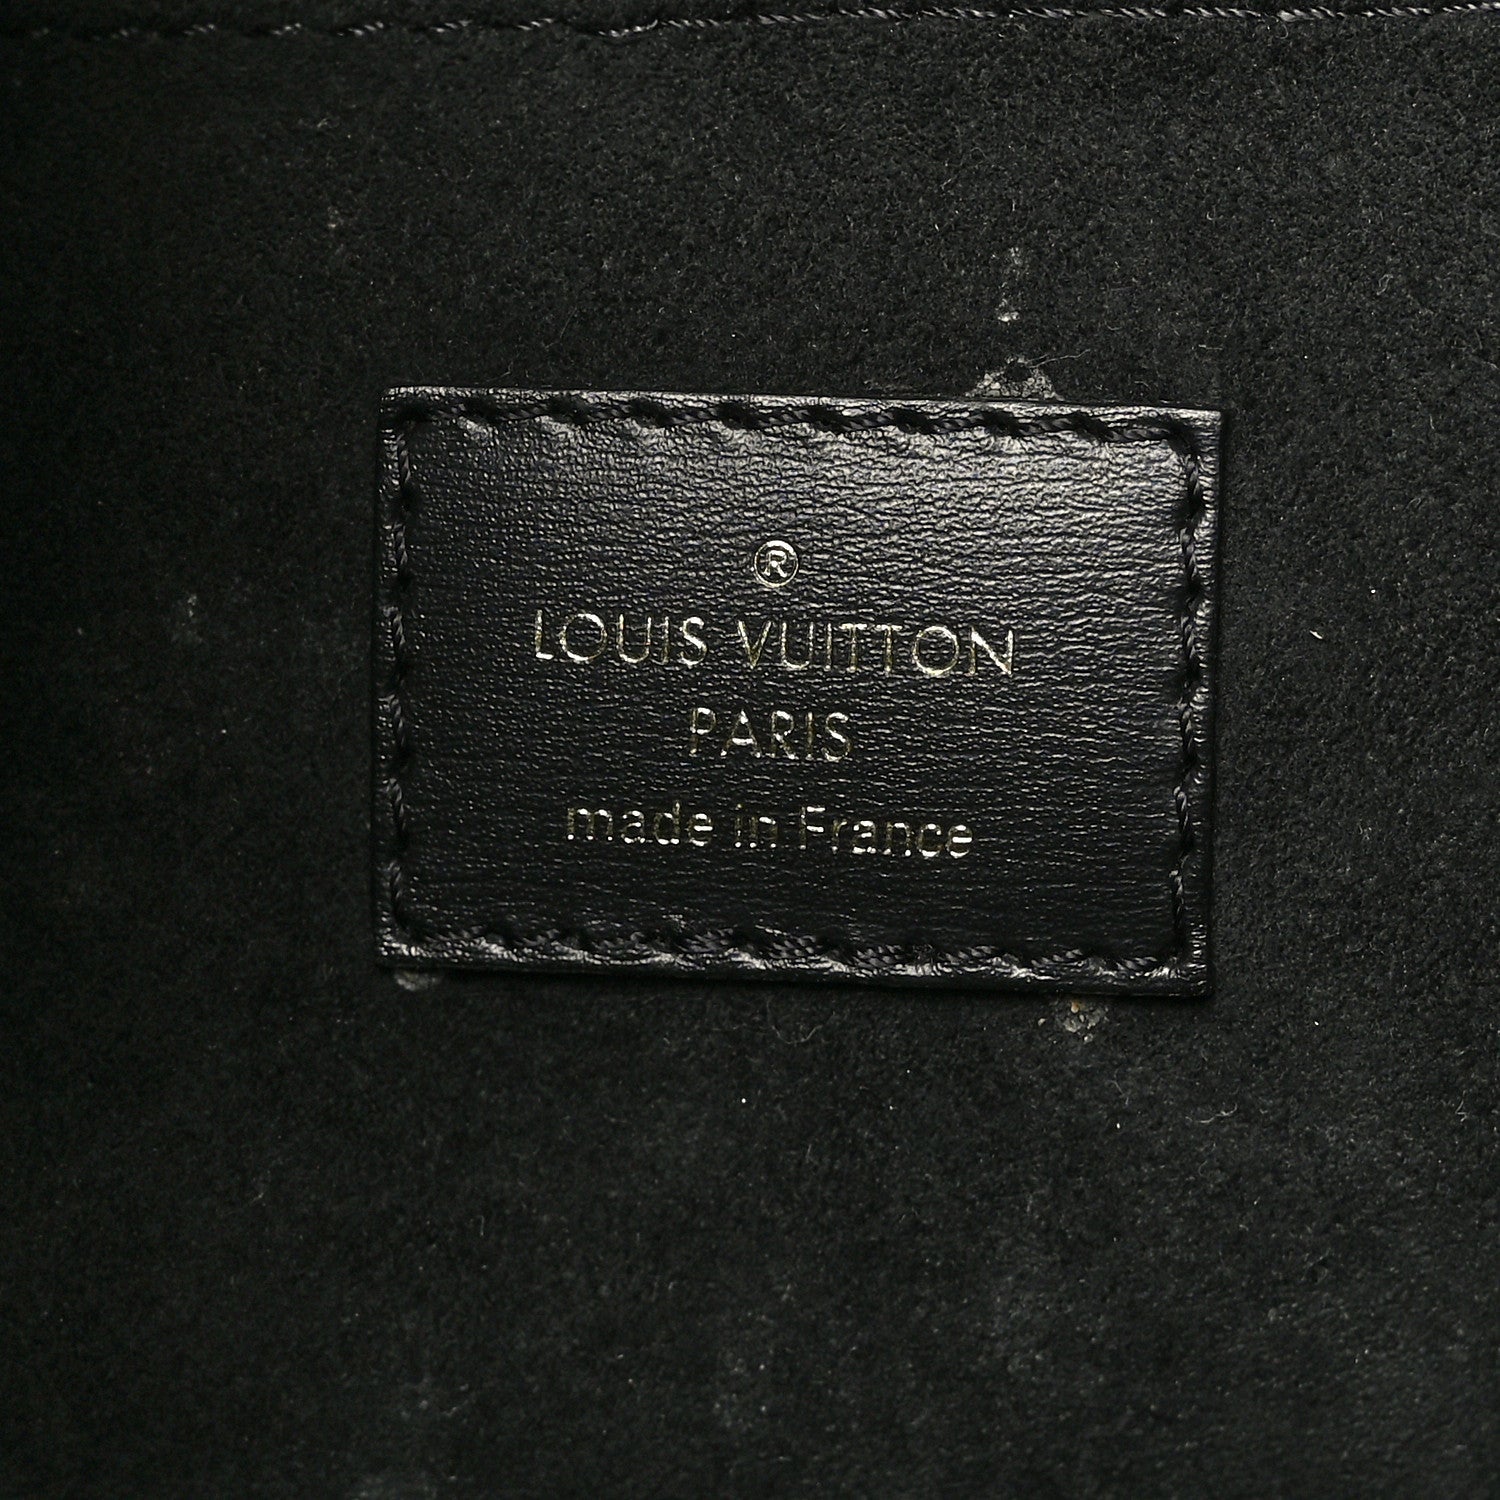 Louis Vuitton Jacquard Since 1854 Onthego GM Grey Tote Bag